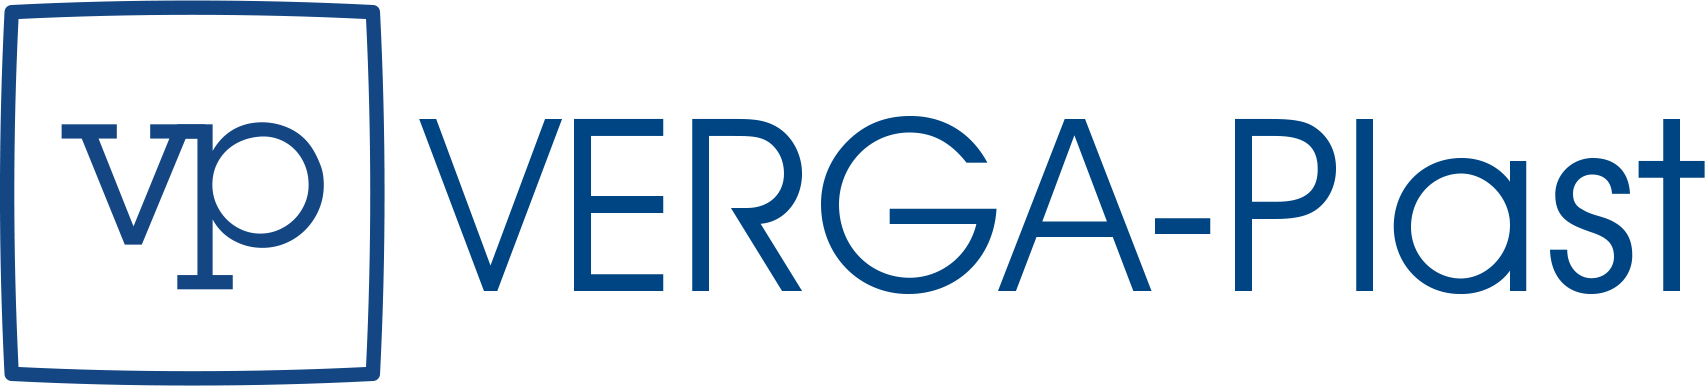 VERGA-Plast-Logo